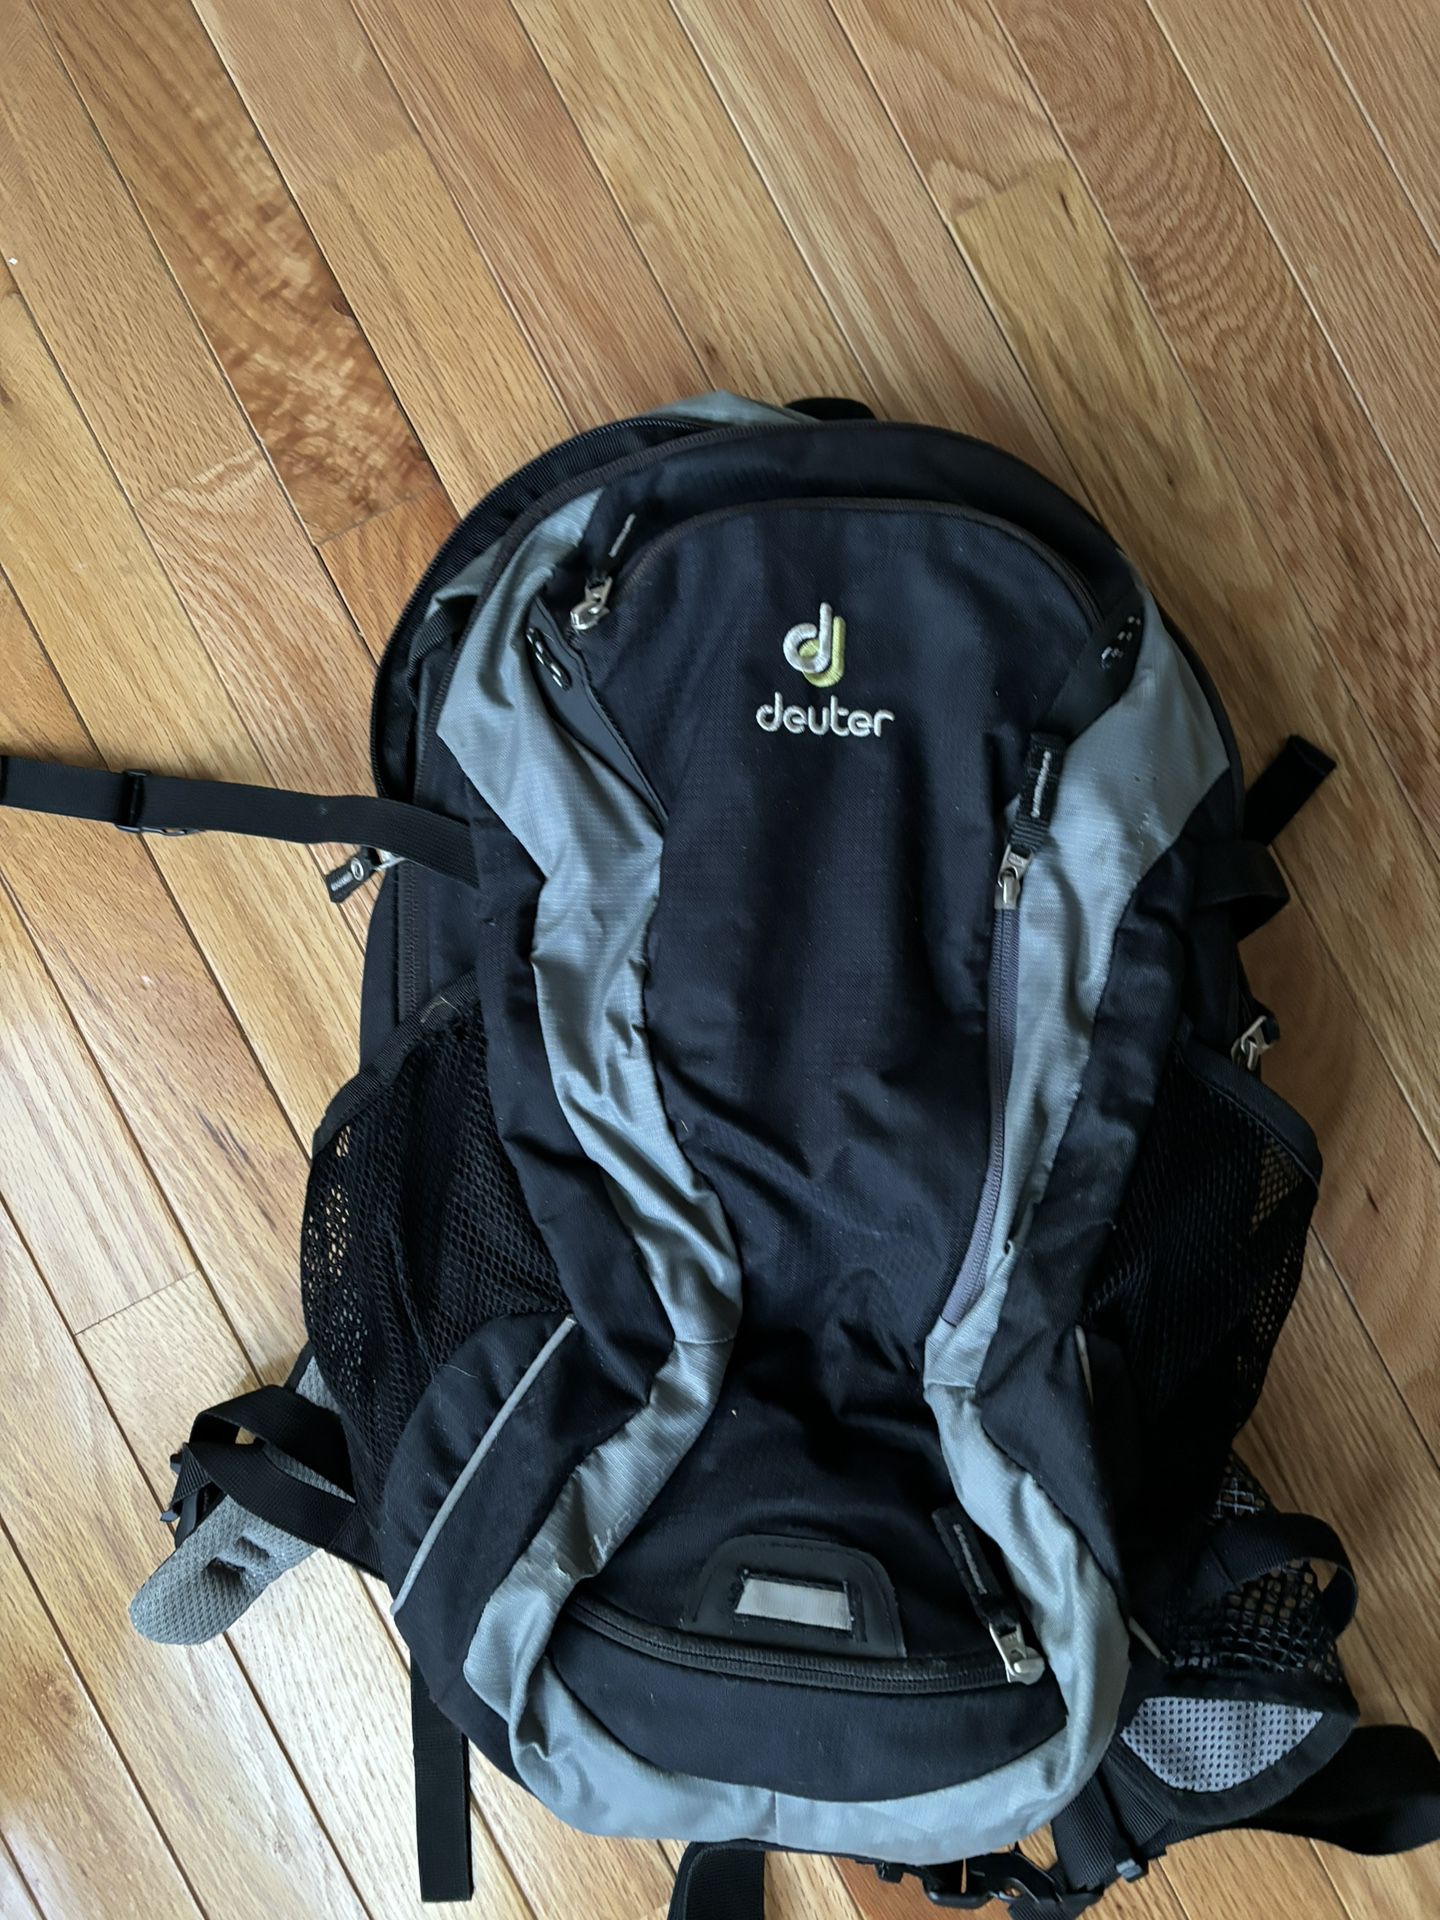 Deuter Bike Backpack